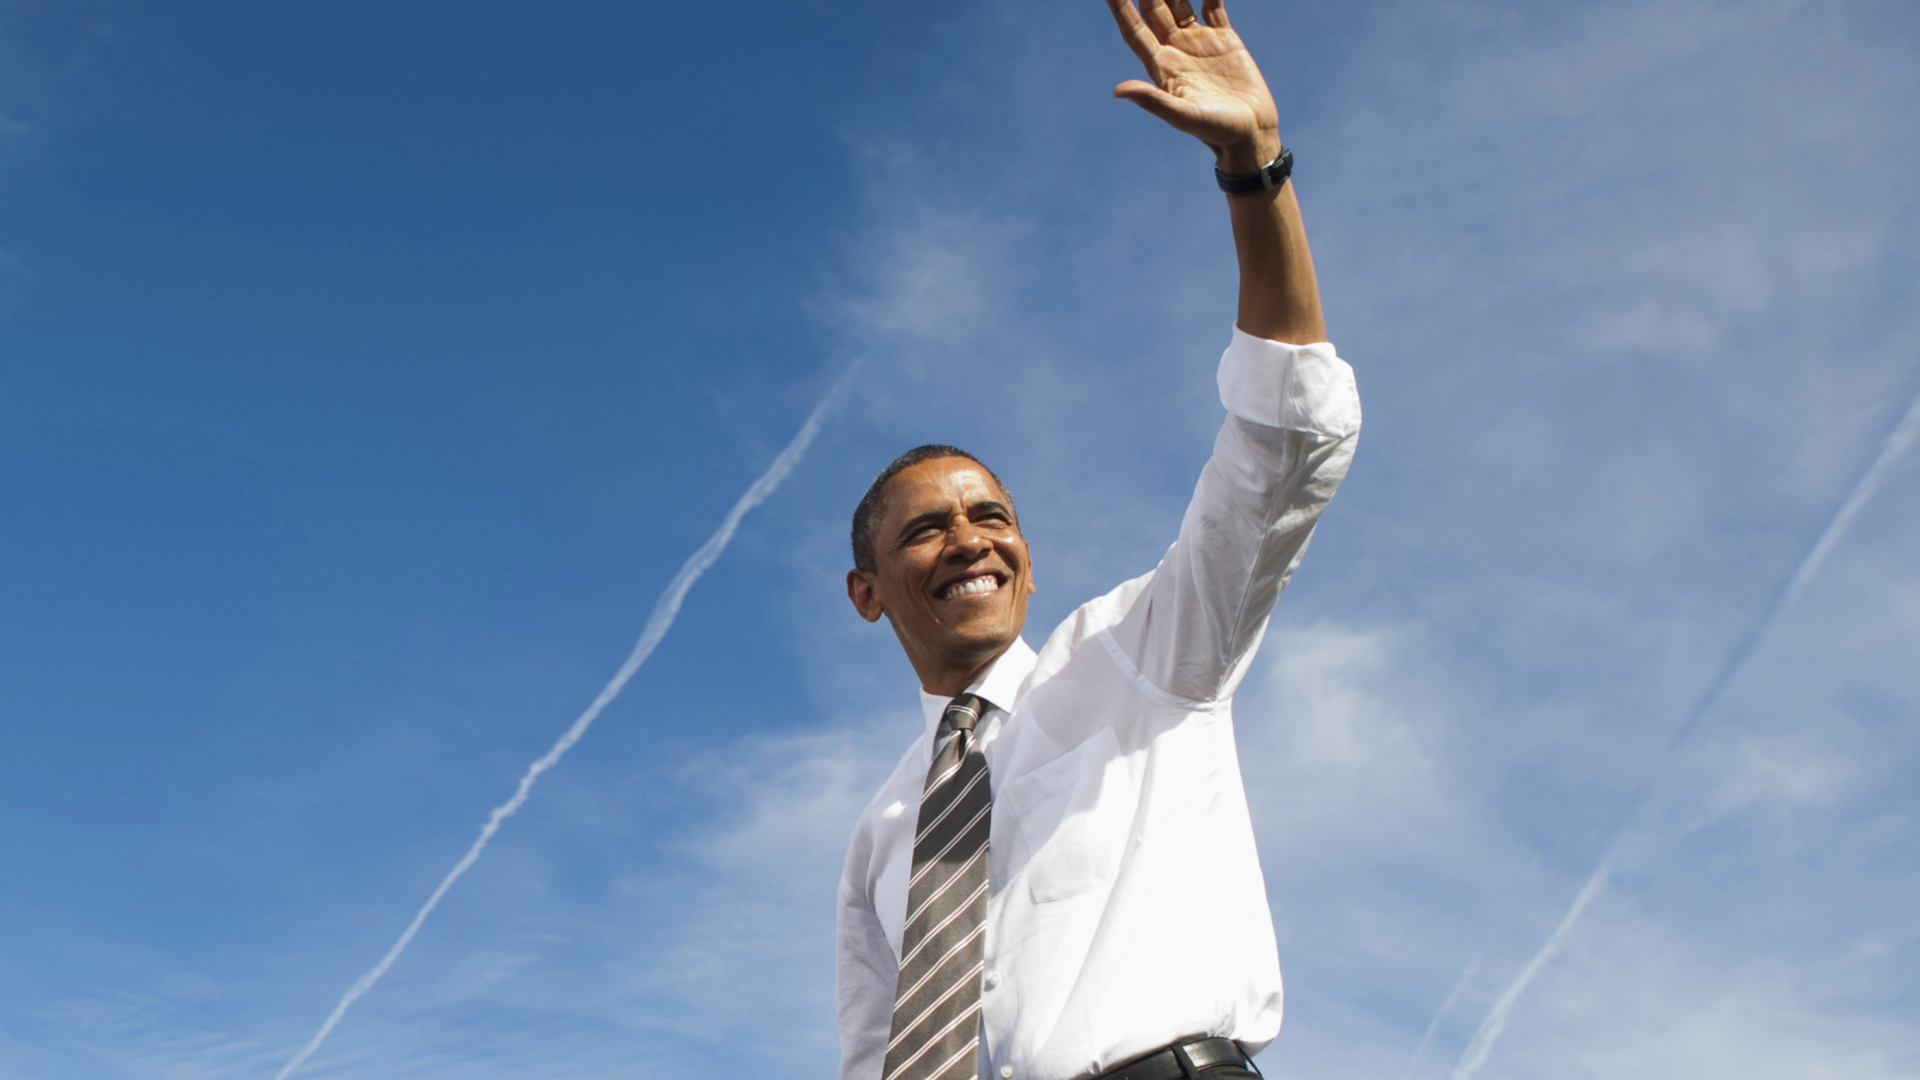 President Barack Obama HD Image Photos Wallpaper